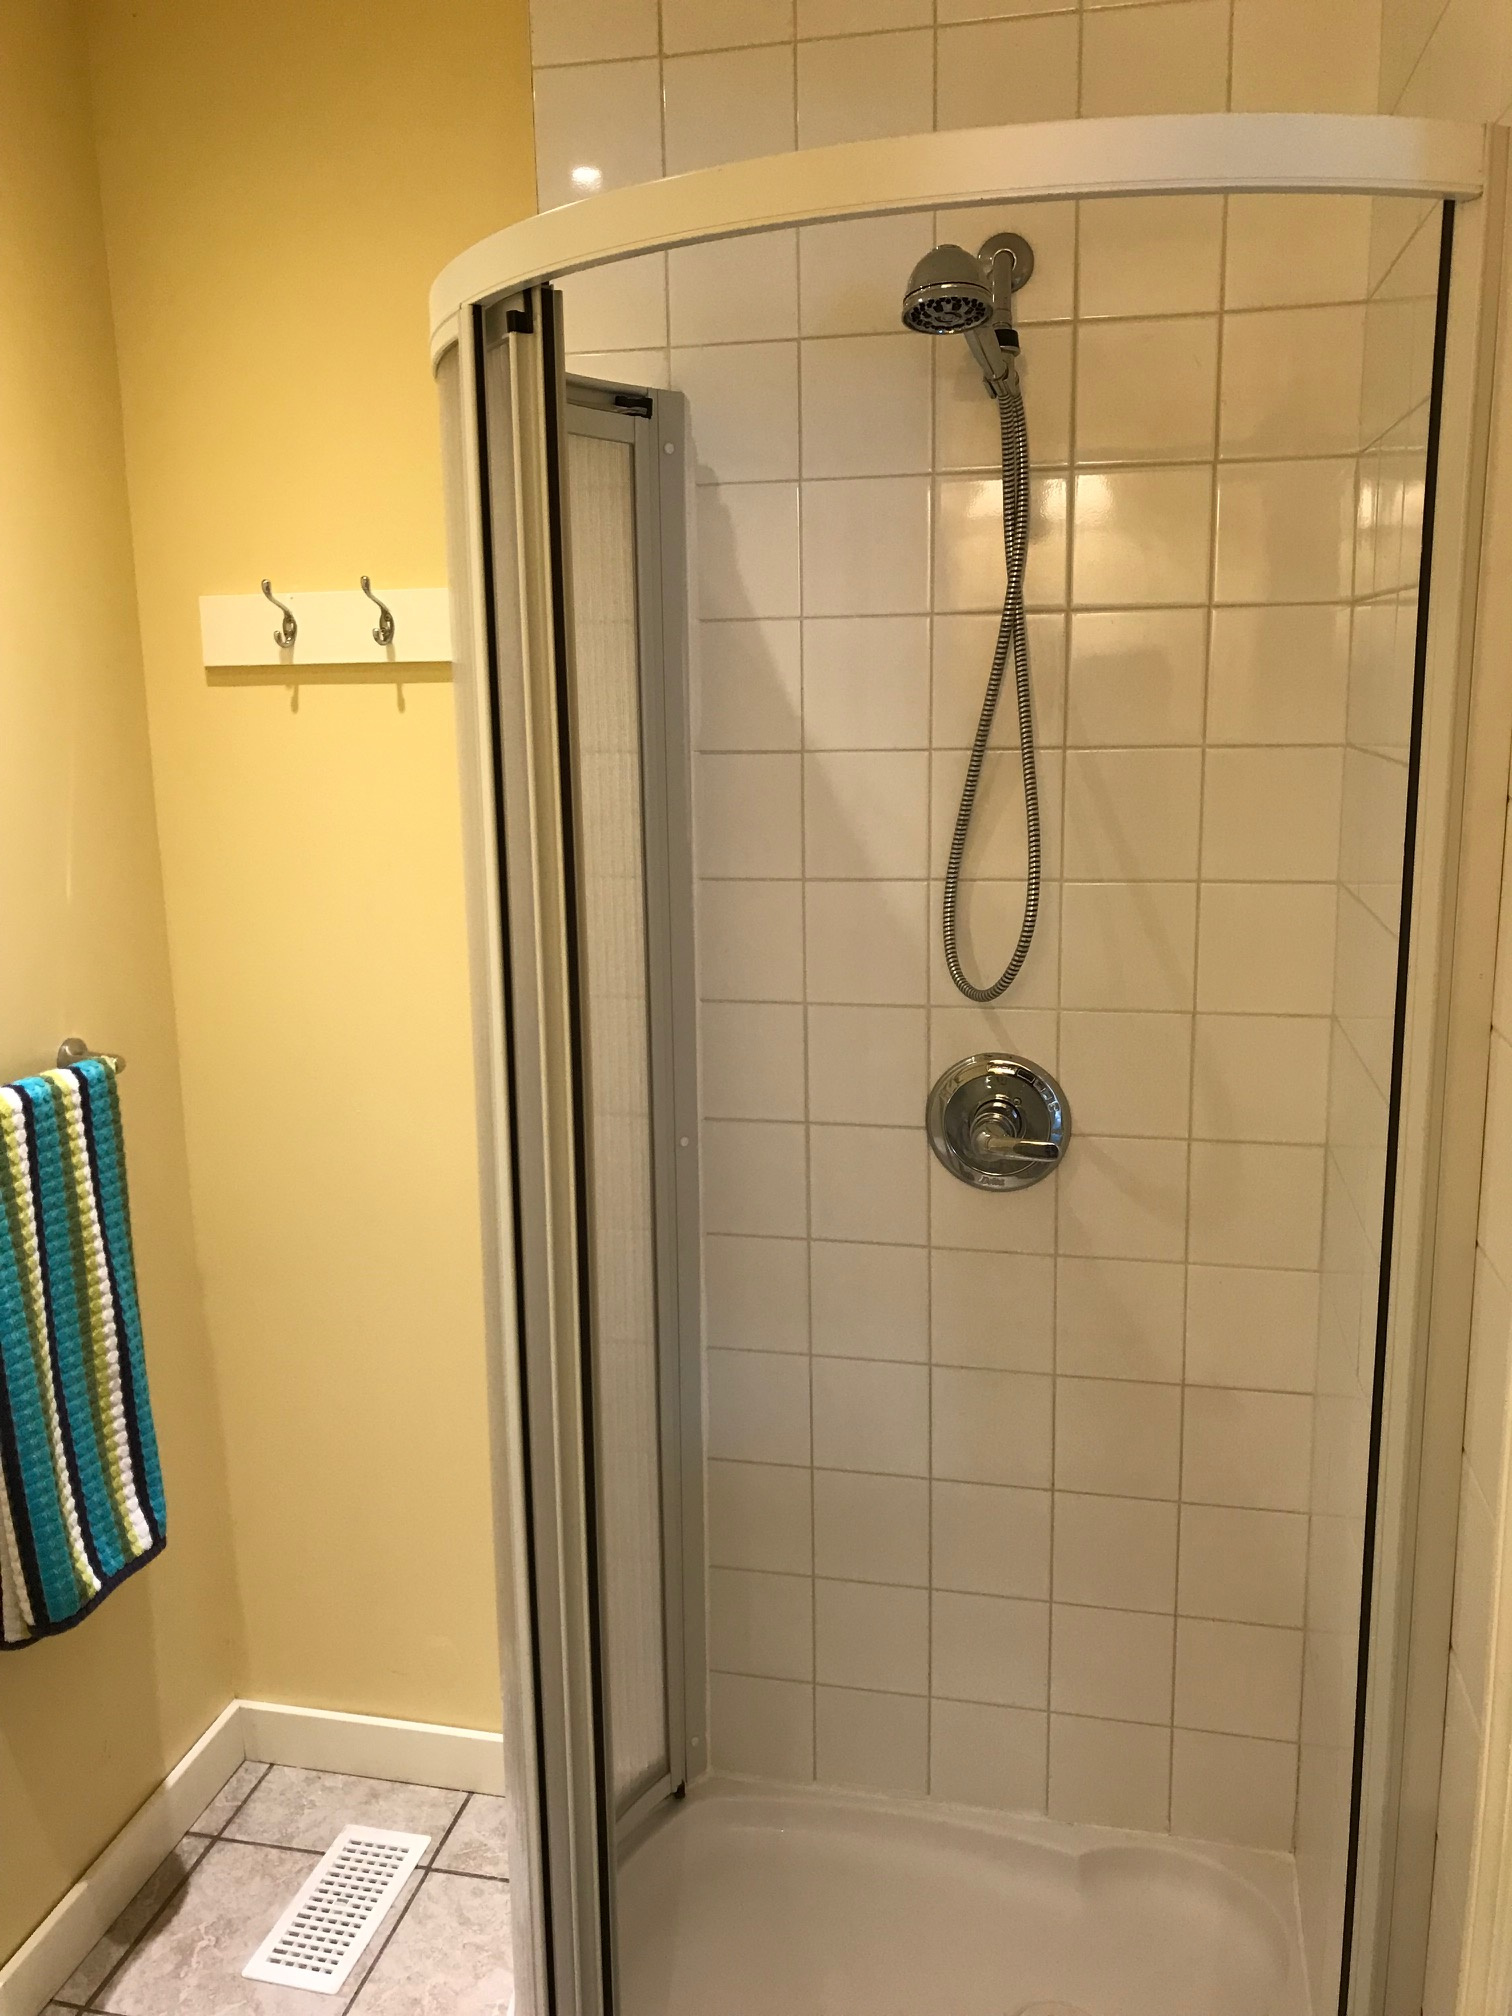 2nd bathroom - shower